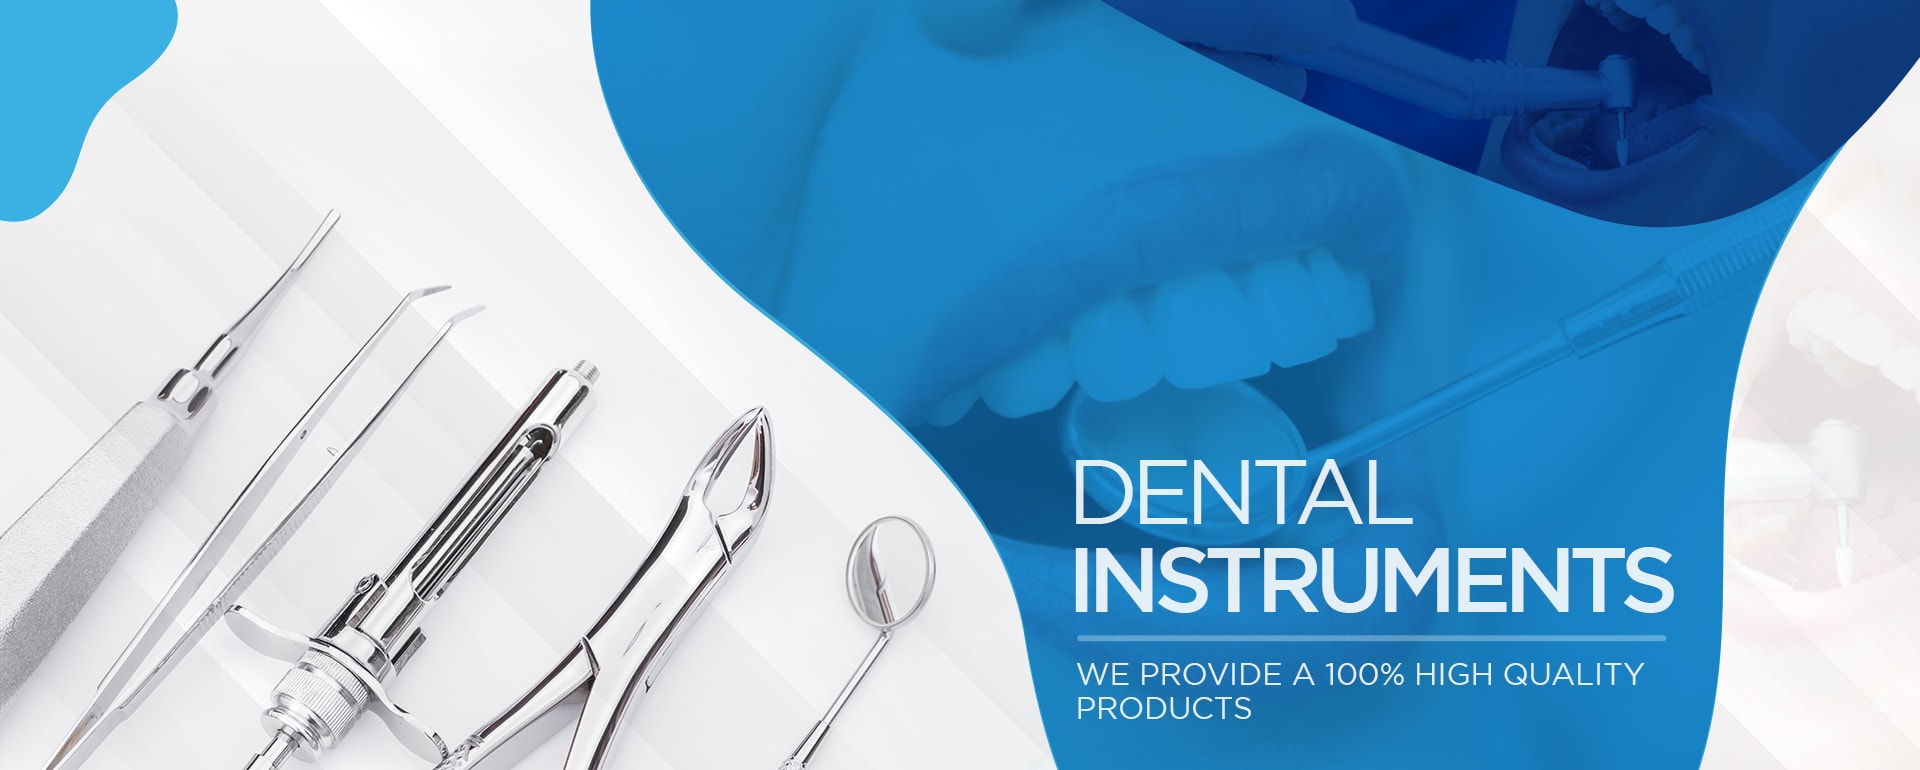 Dental instruments banner-min